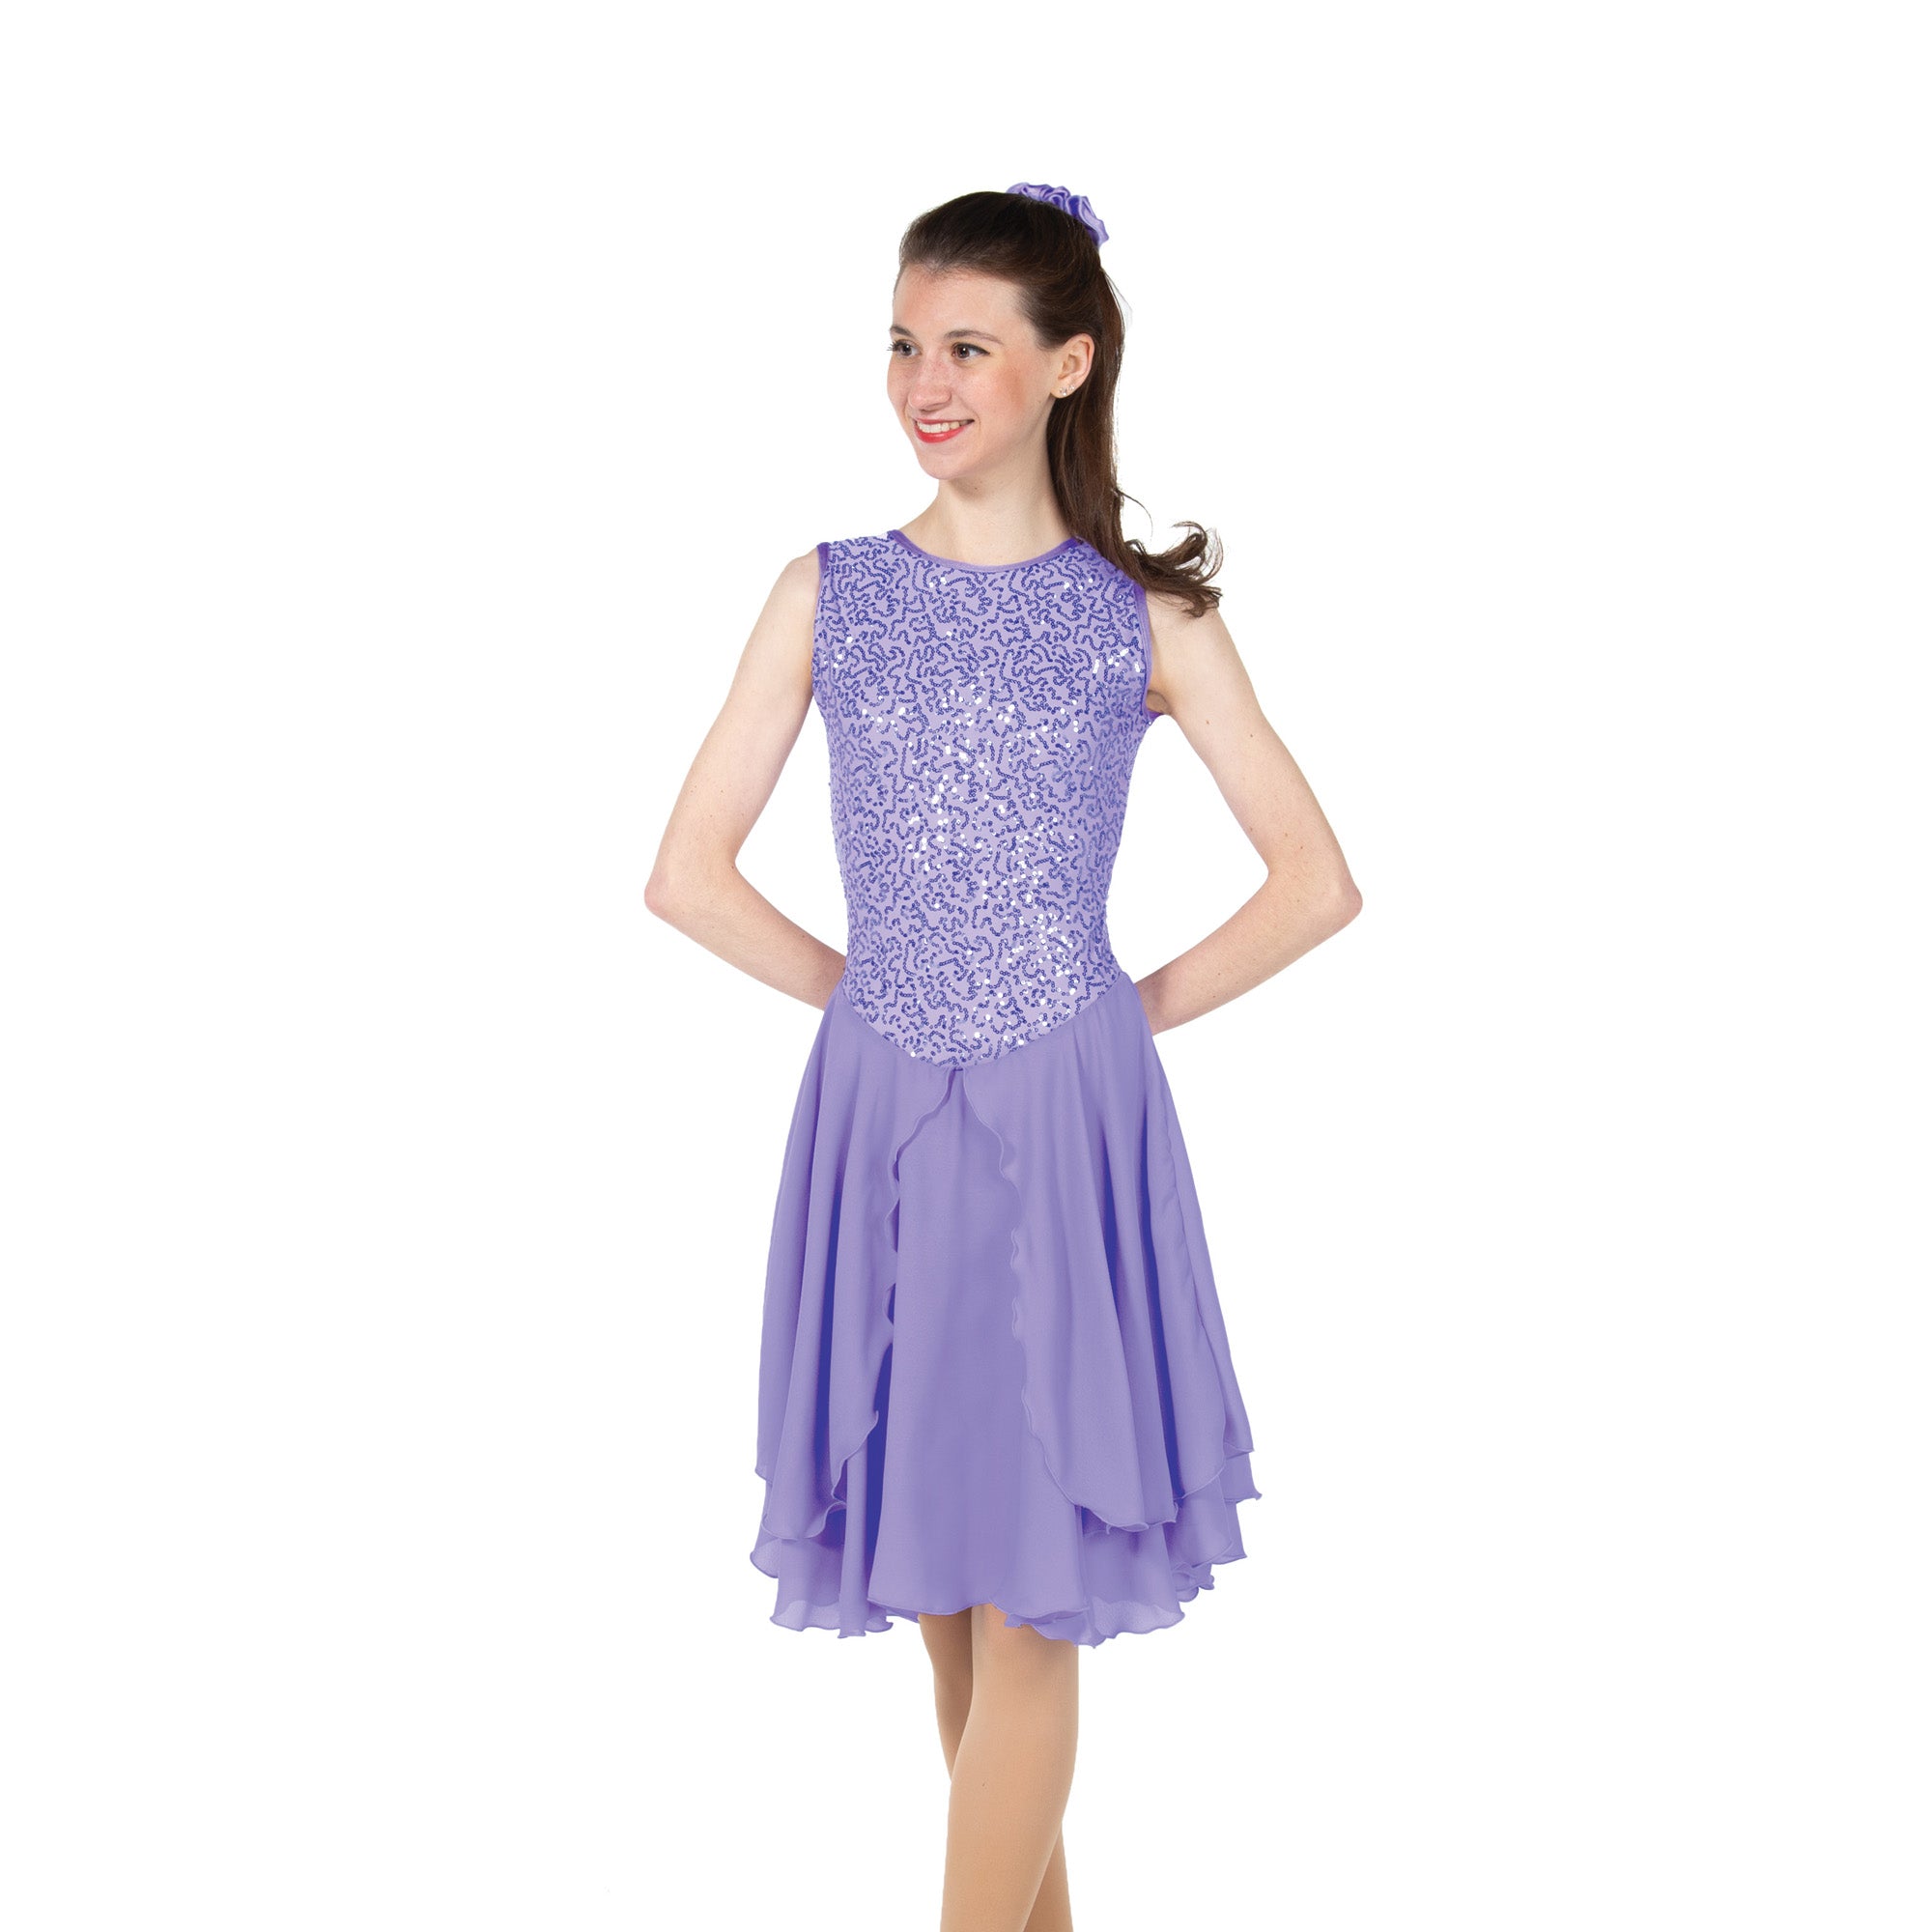 111 Dancerella Dance Dress in Iris Purple by Jerry's